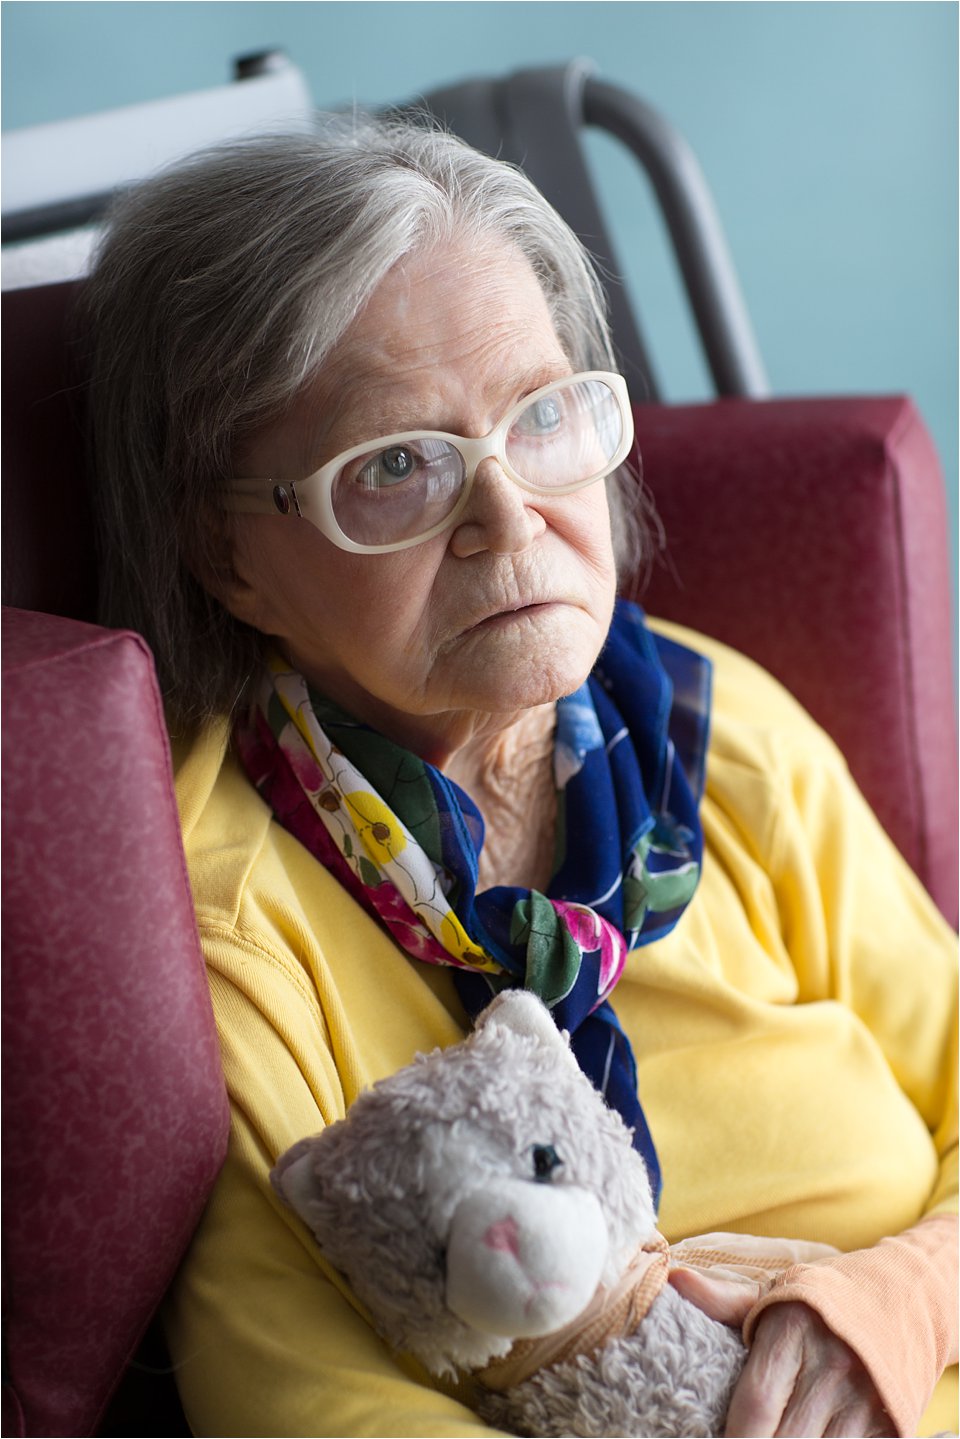 Elderly woman in stylish glasses with stuffed animal (C) Maundy Mitchell